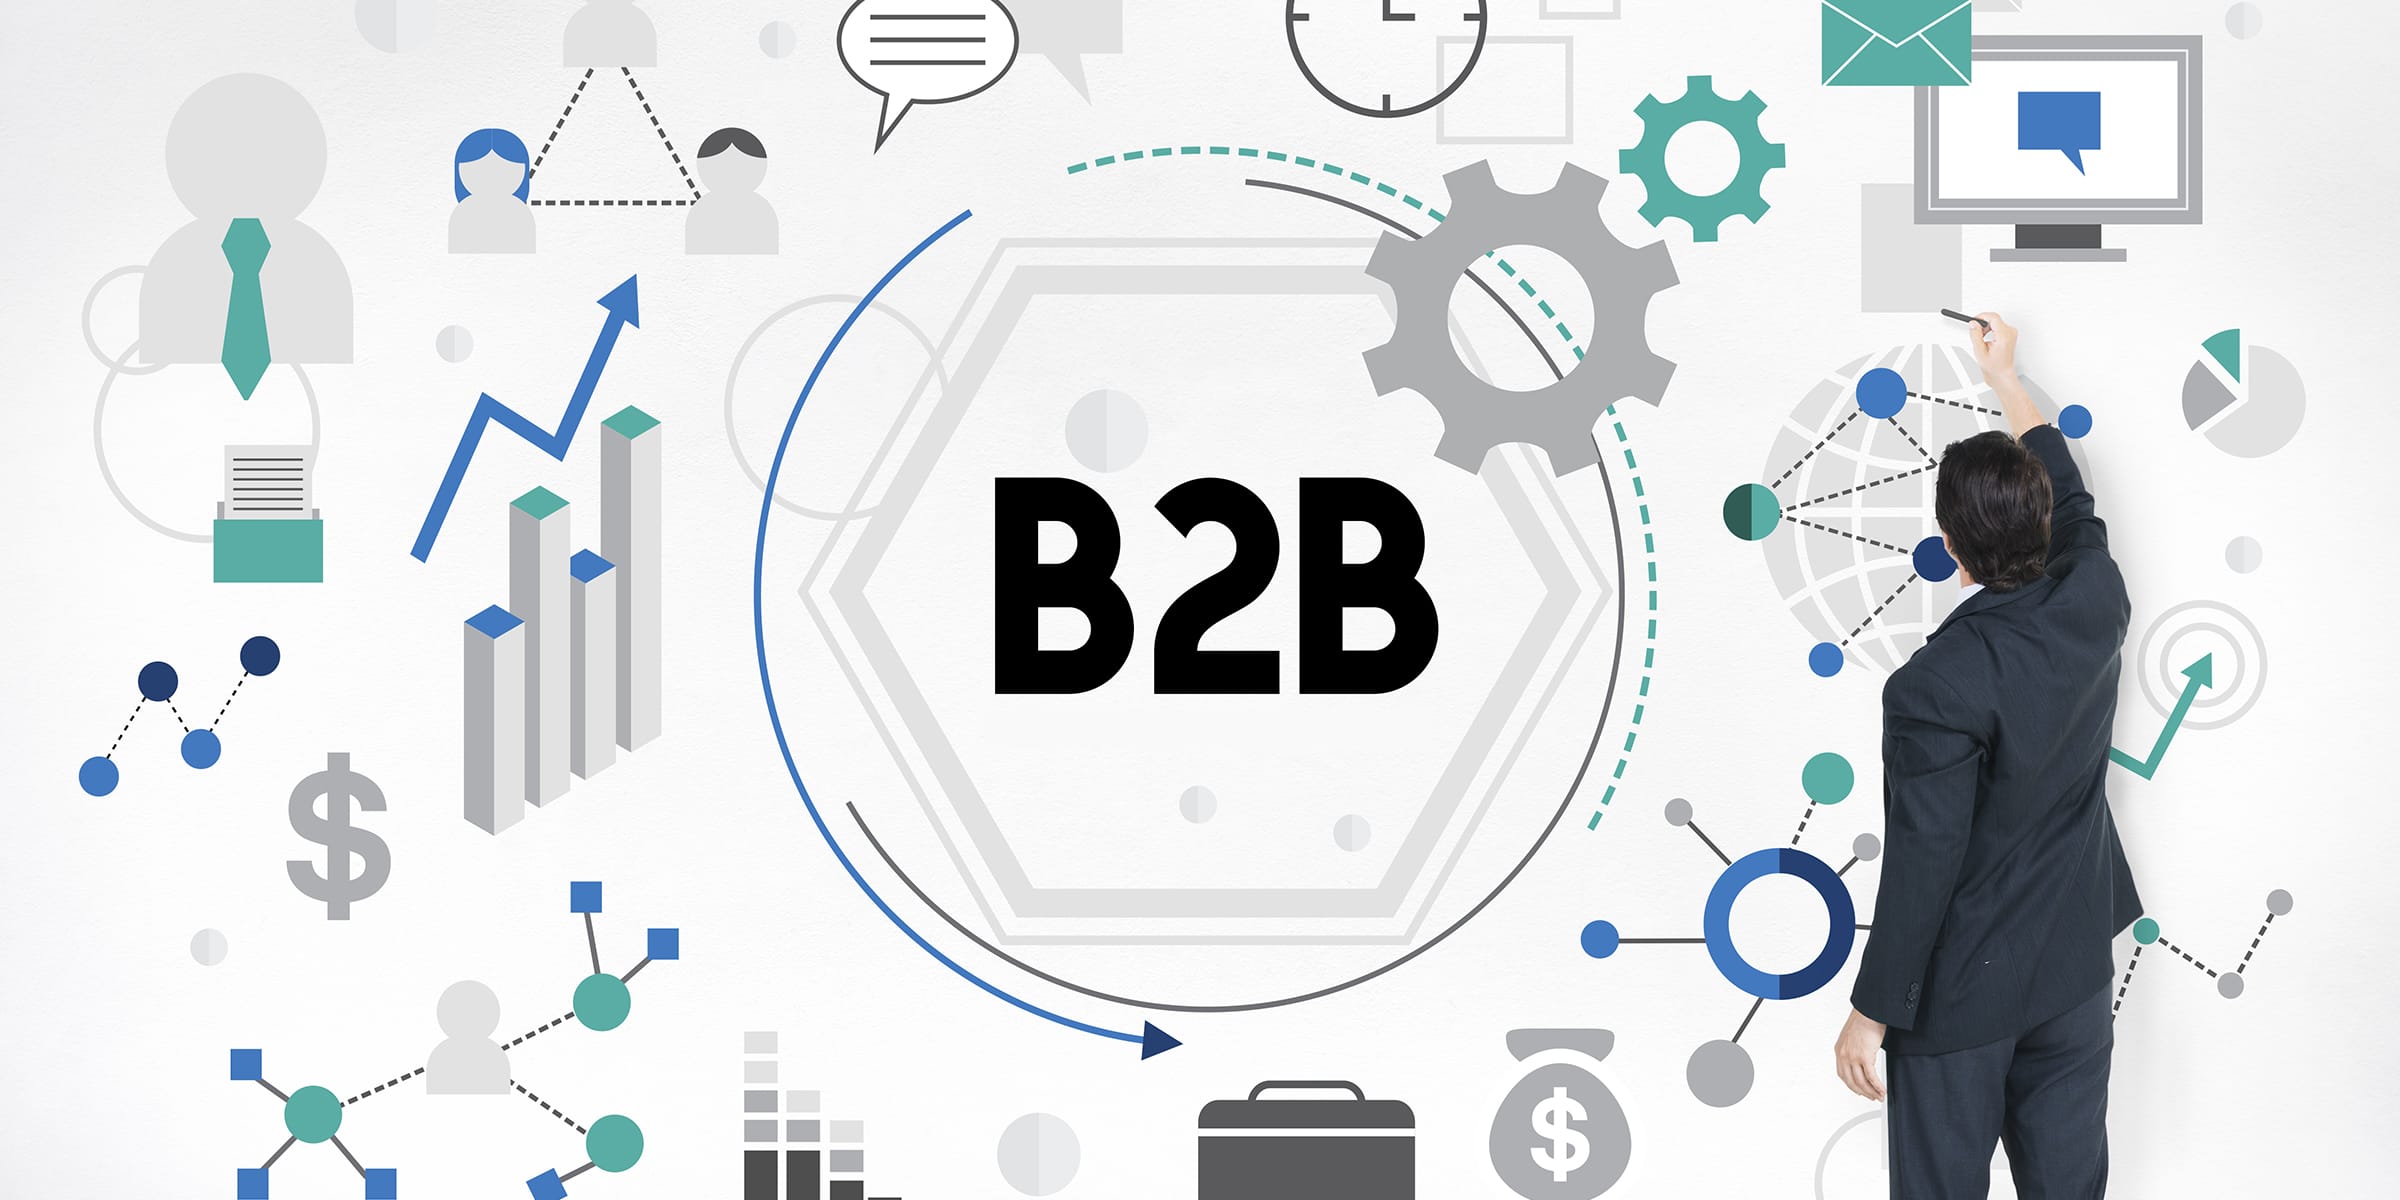 Enterprise level B2B software is a must for enterprise brands